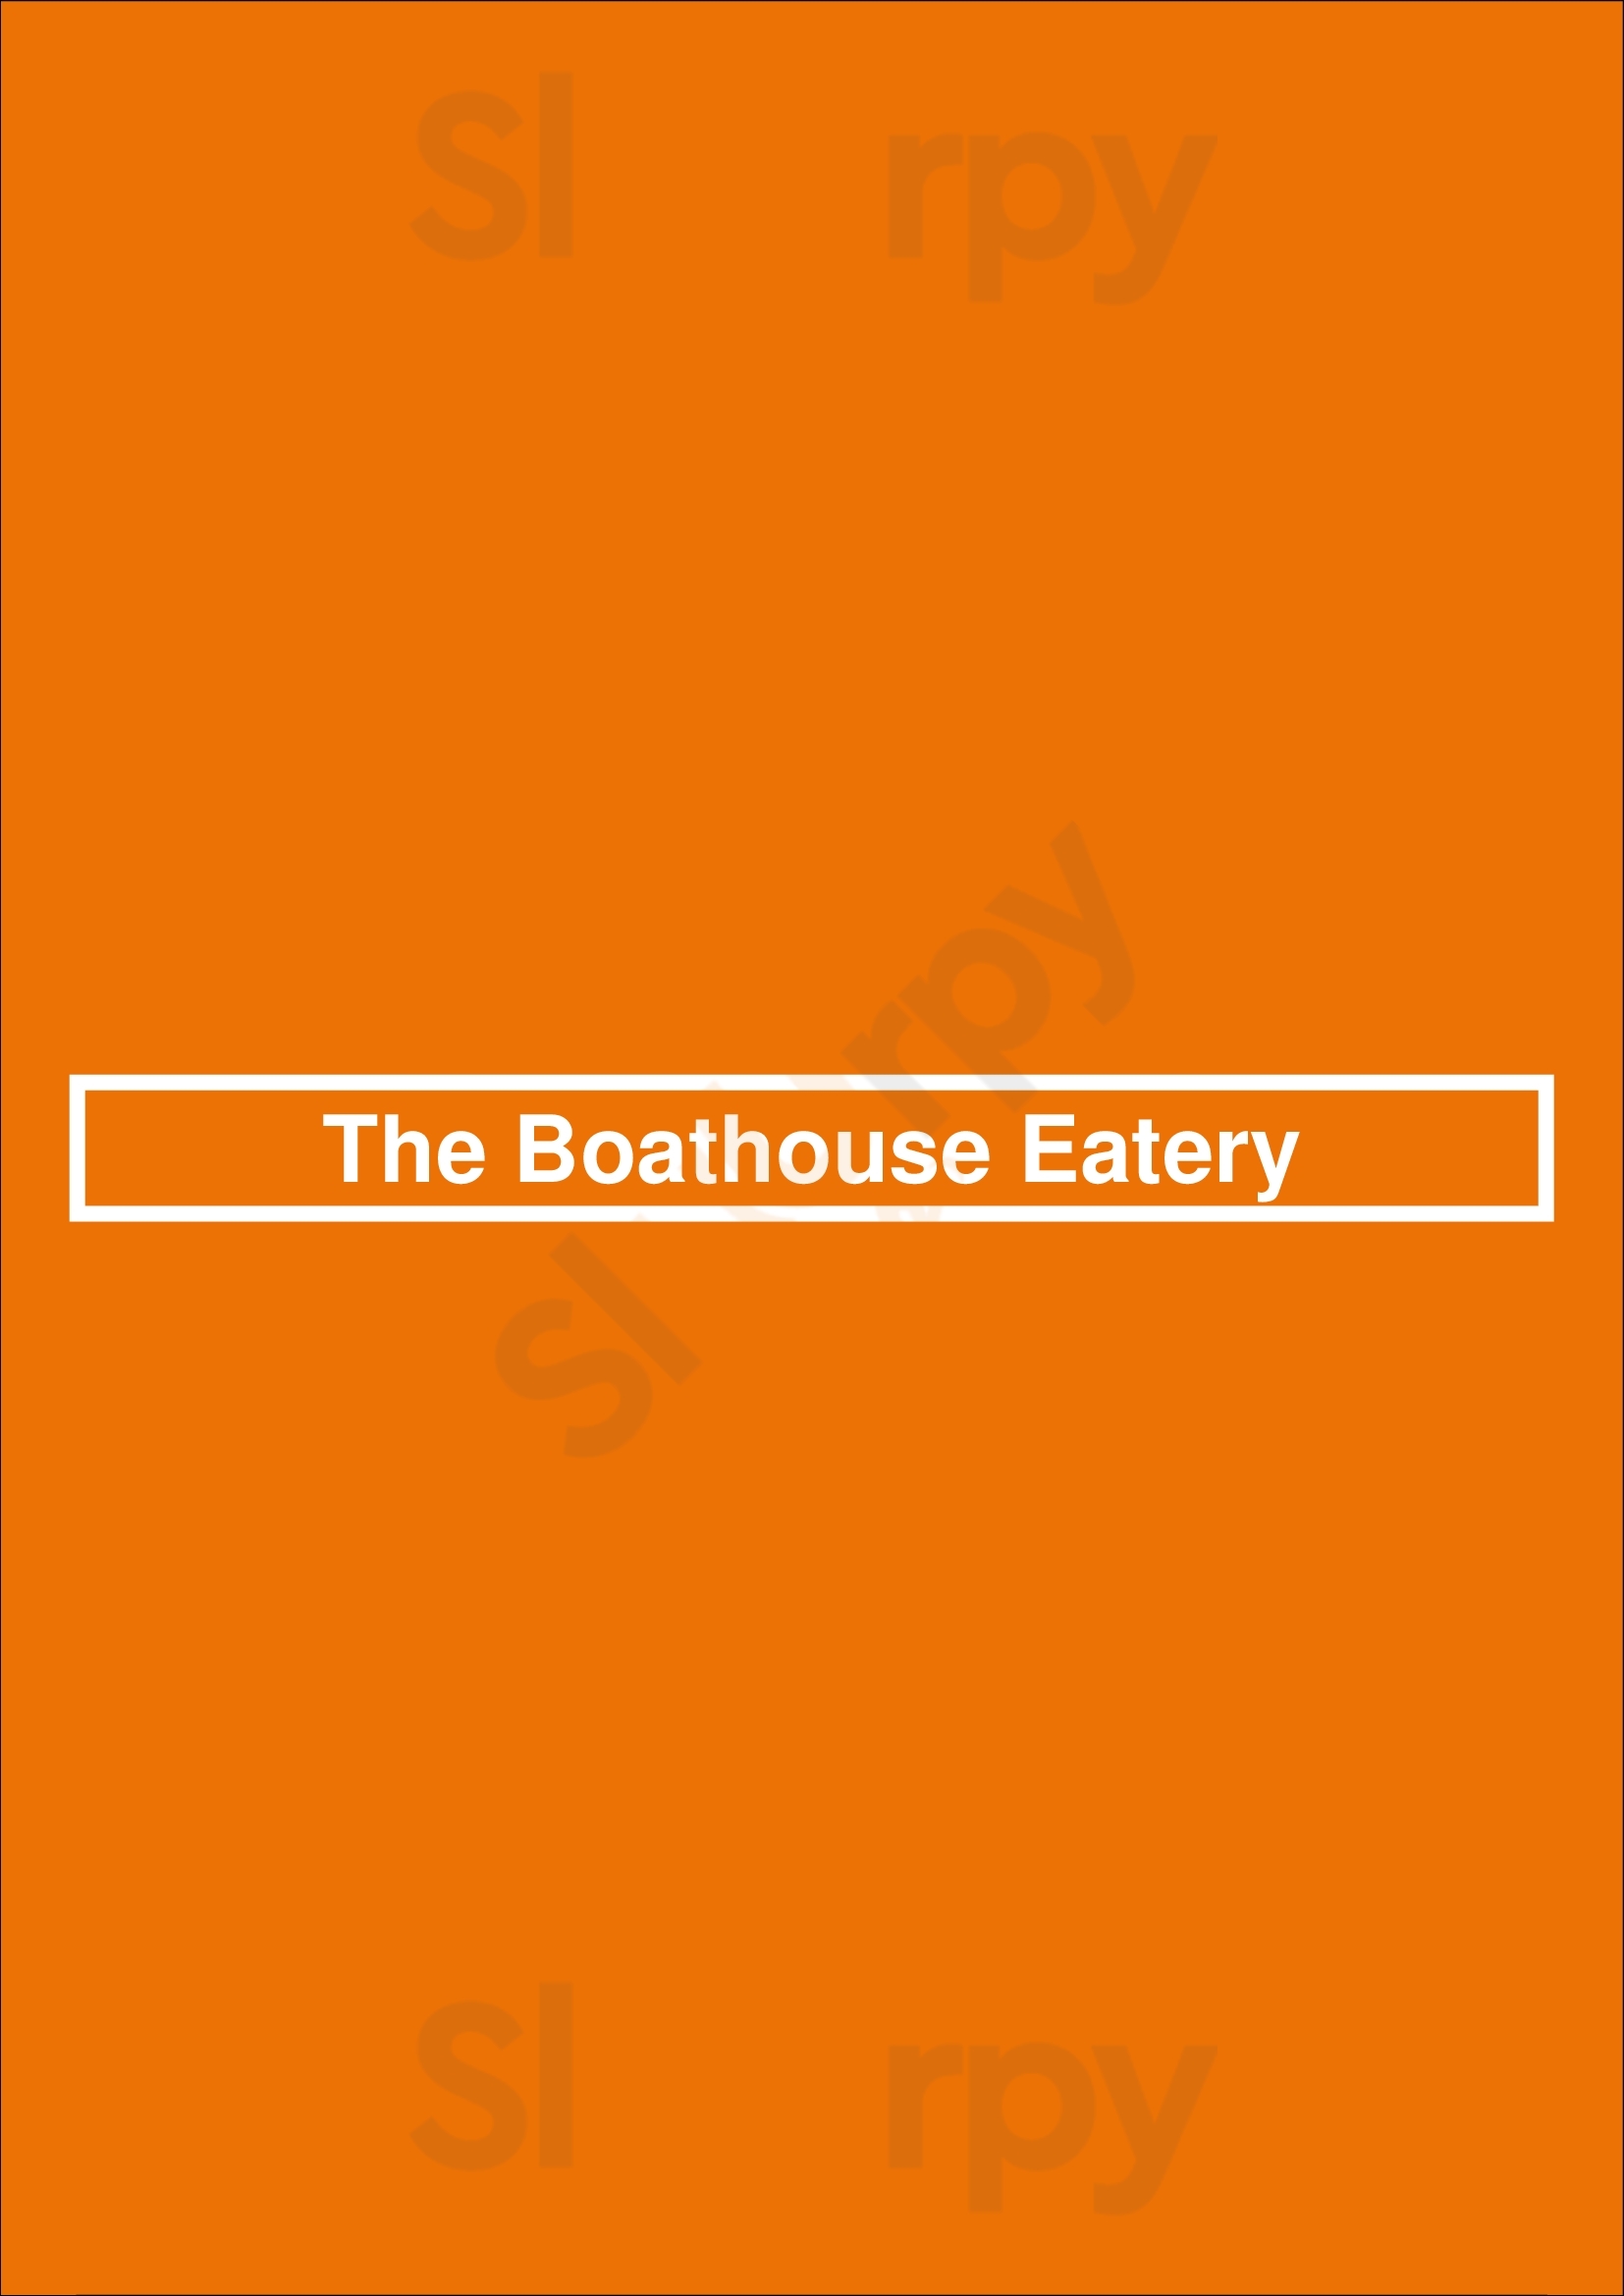 The Boathouse Eatery Midland Menu - 1